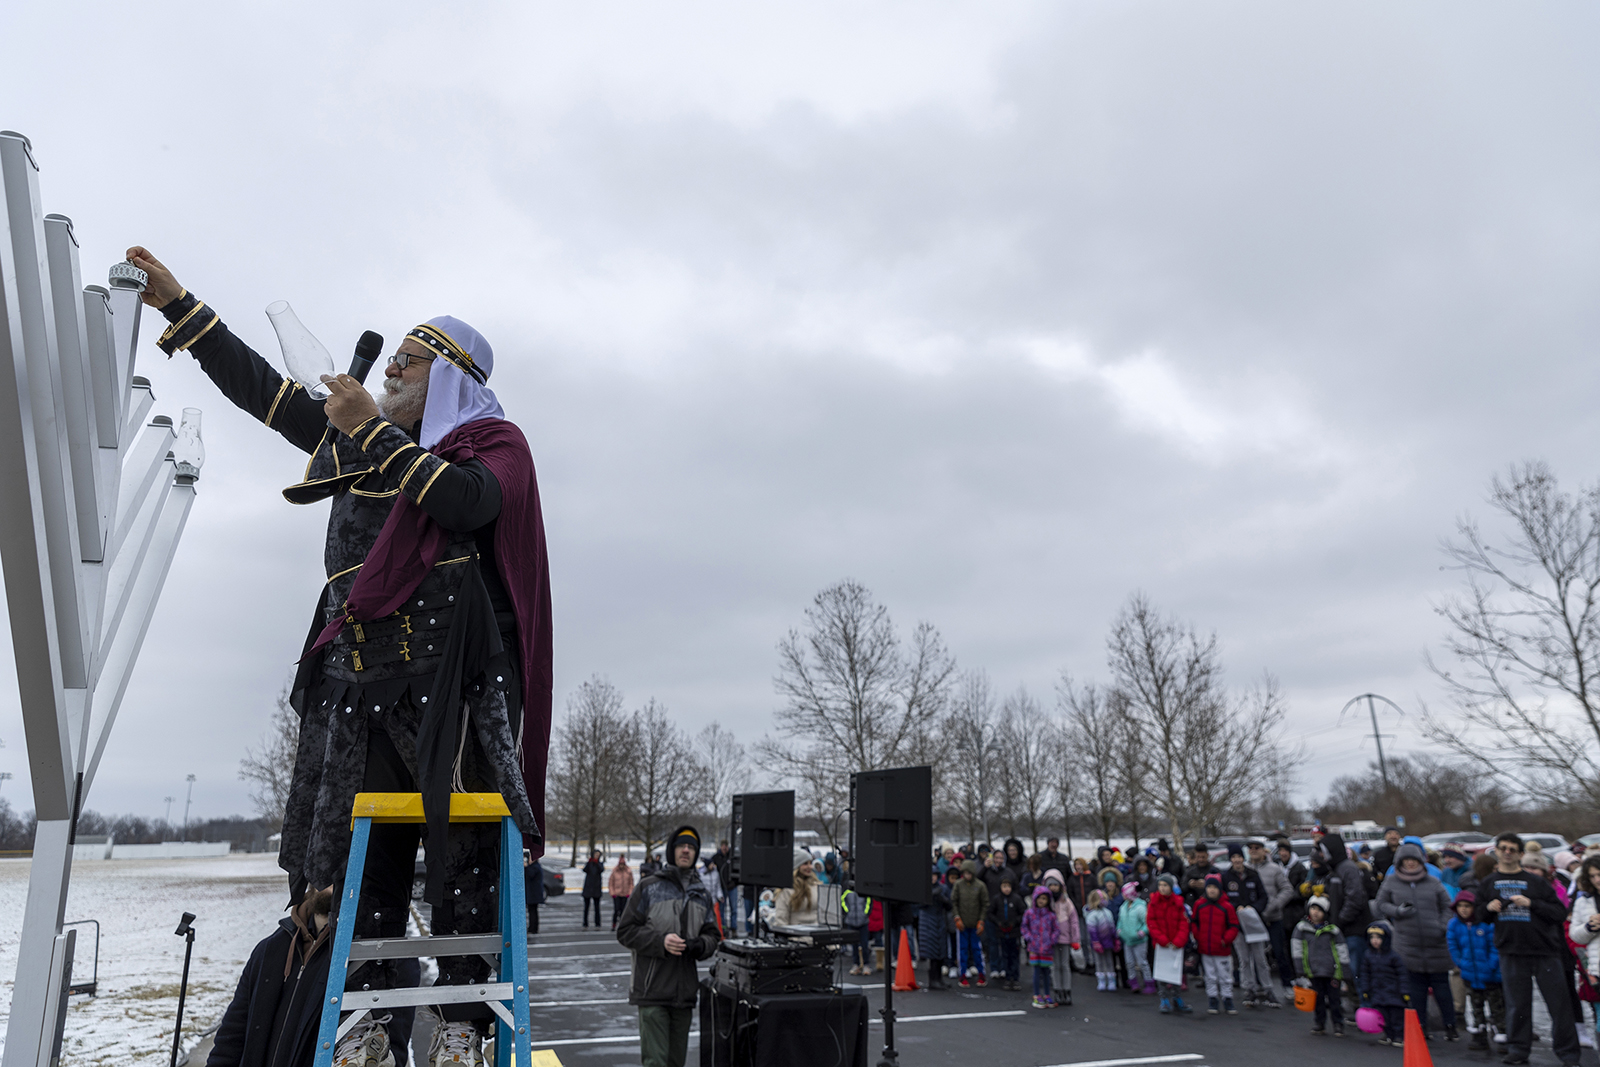 Rabbi Areyah Kaltmann of Columbus, Ohio, lights the menorah in Bevelhymer Park on Dec. 18, 2022. Kaltmann is dressed as Judah Macabee, the hero of the Hanukkah story. Photo by Harry Acosta Photography